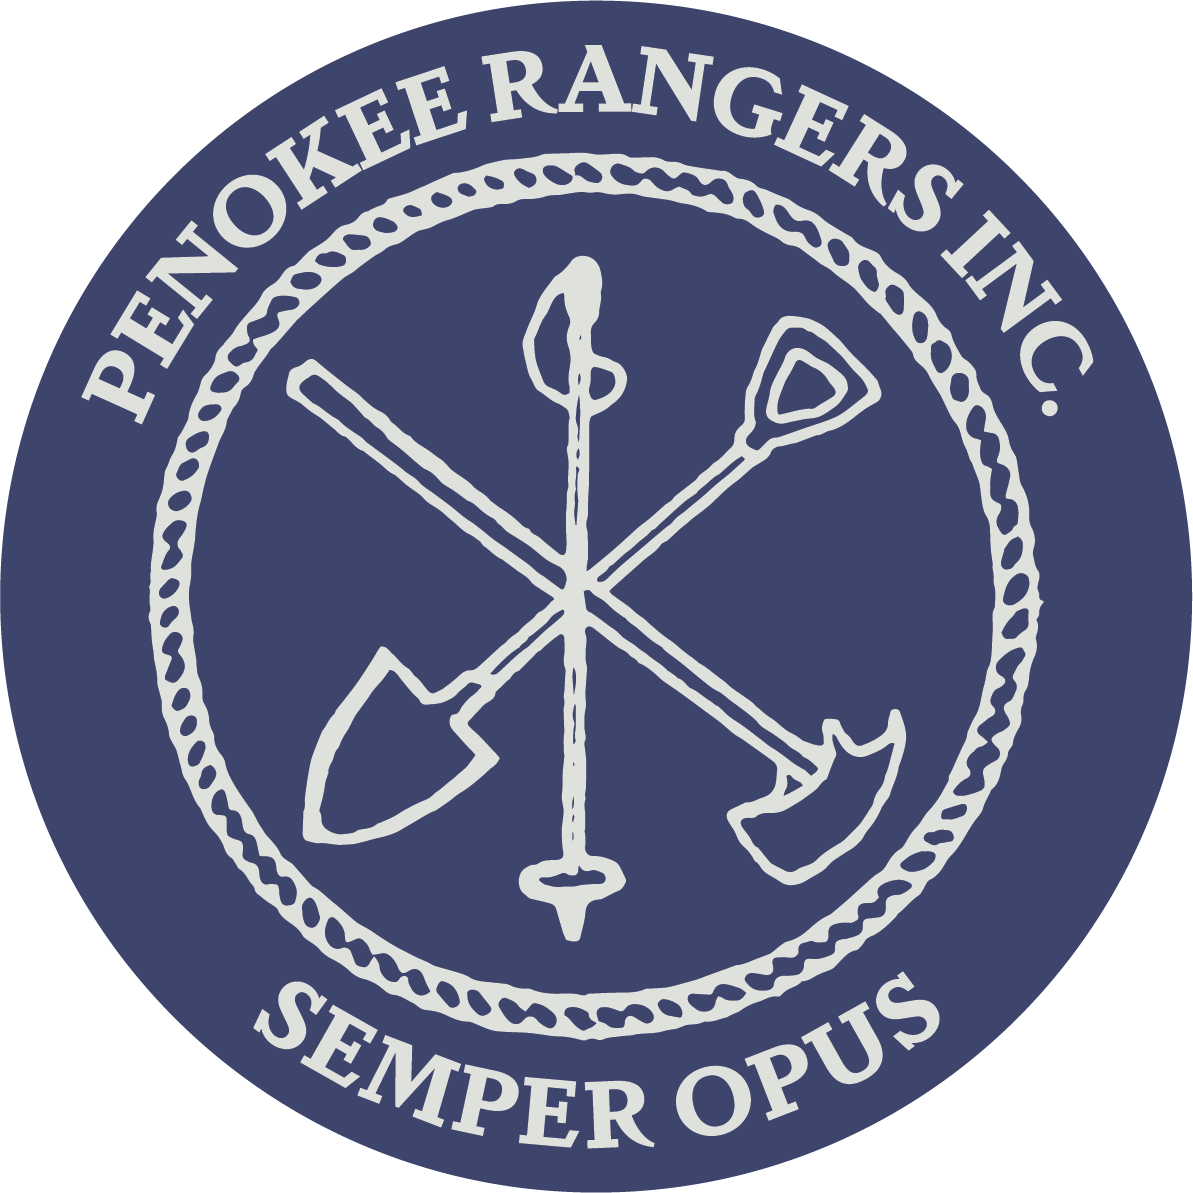 Penokee Rangers